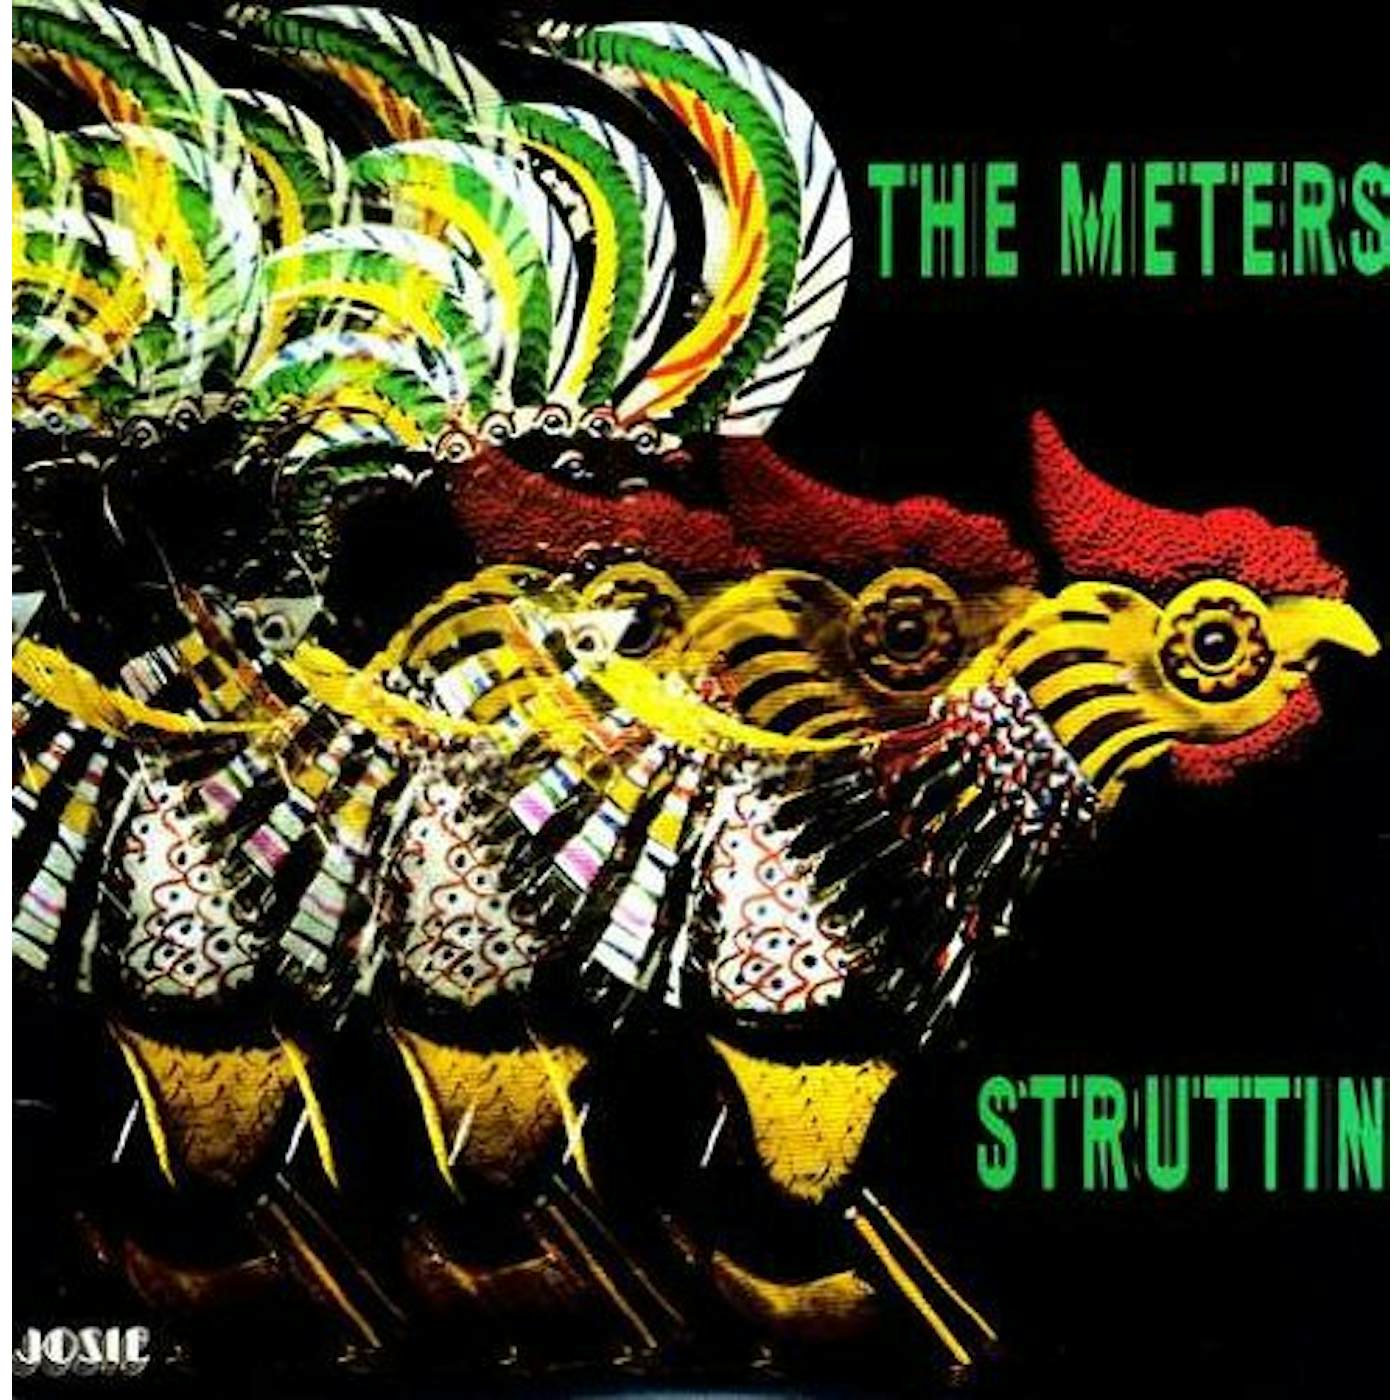 The Meters STRUTTIN Vinyl Record